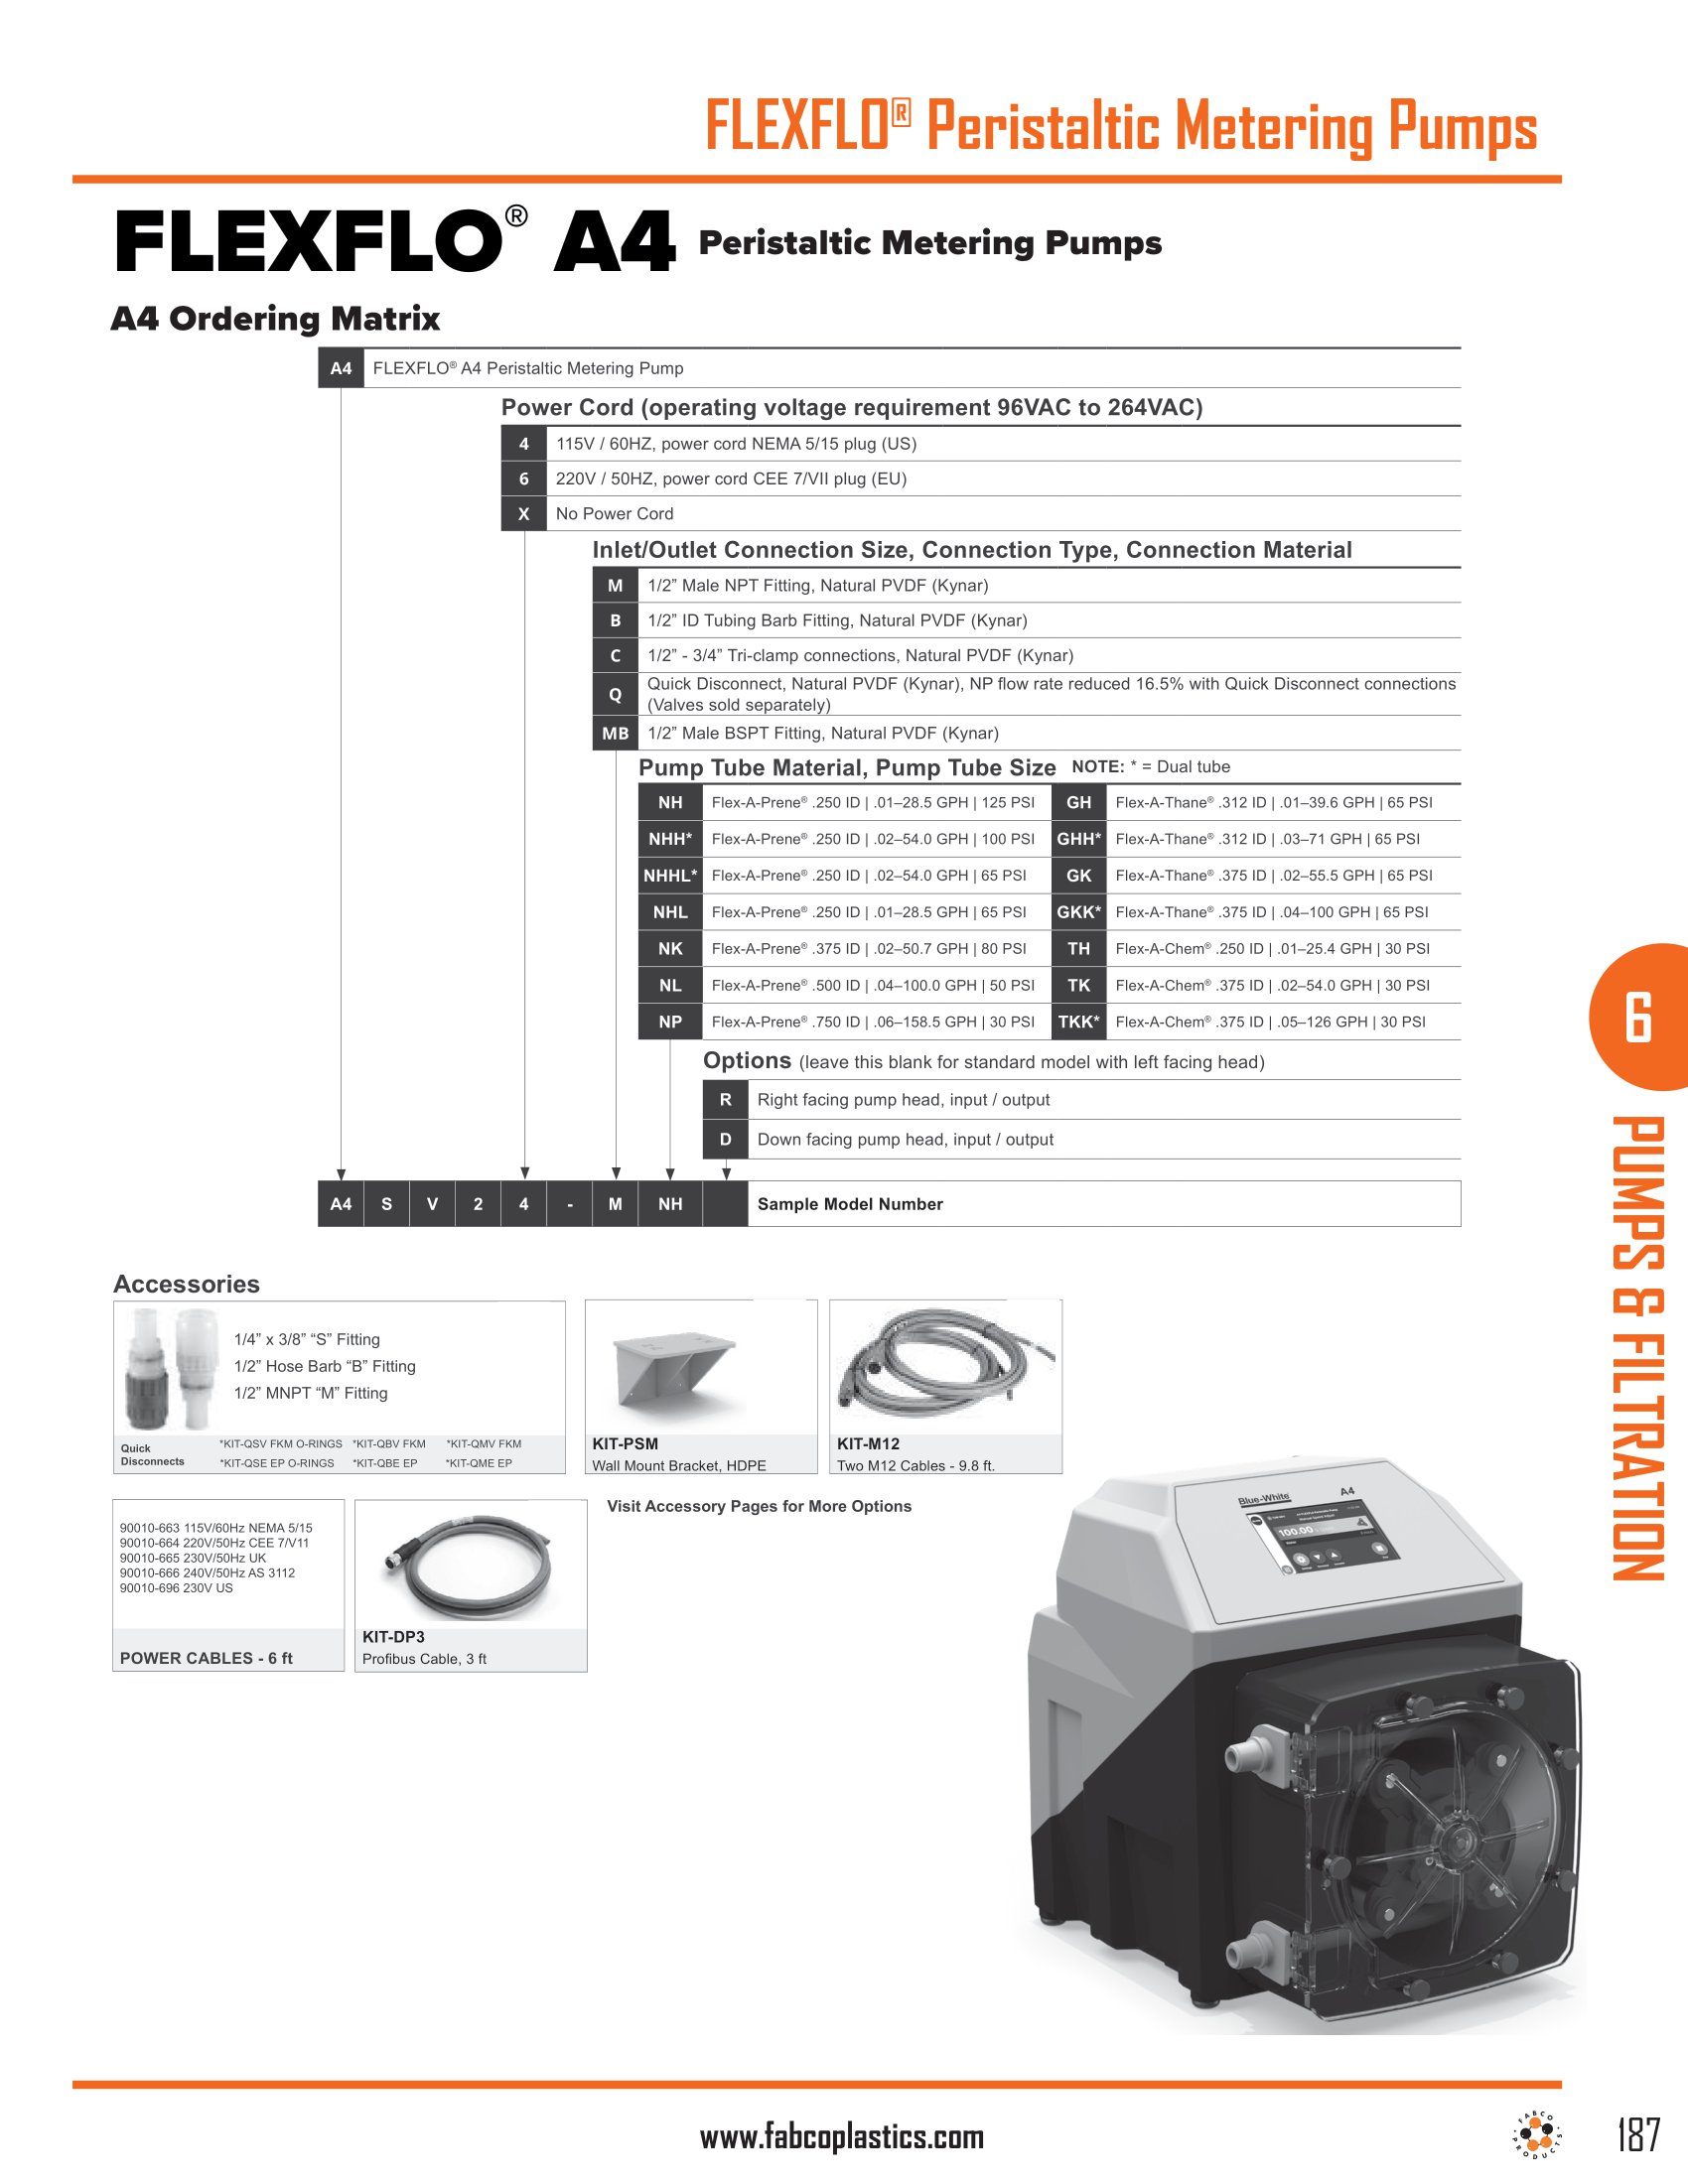 FLEXELO Peristaltic Metering Pumps